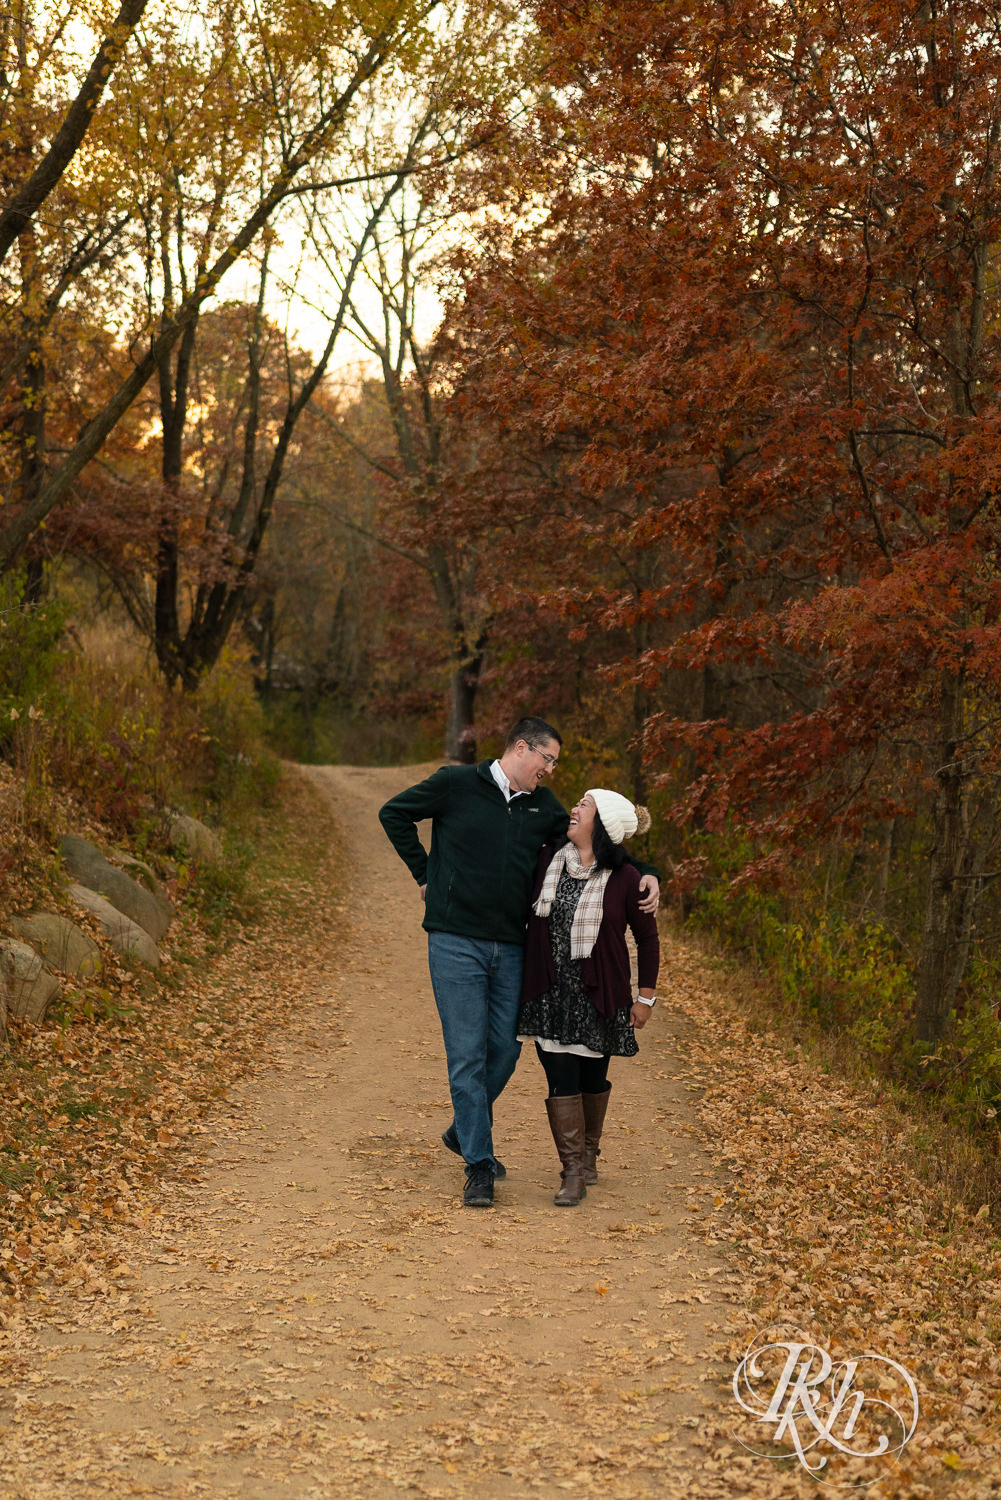 Man and Korean woman walk down trail laughing in fall colors at Lebanon Hills Regional Park in Eagan, Minnesota.